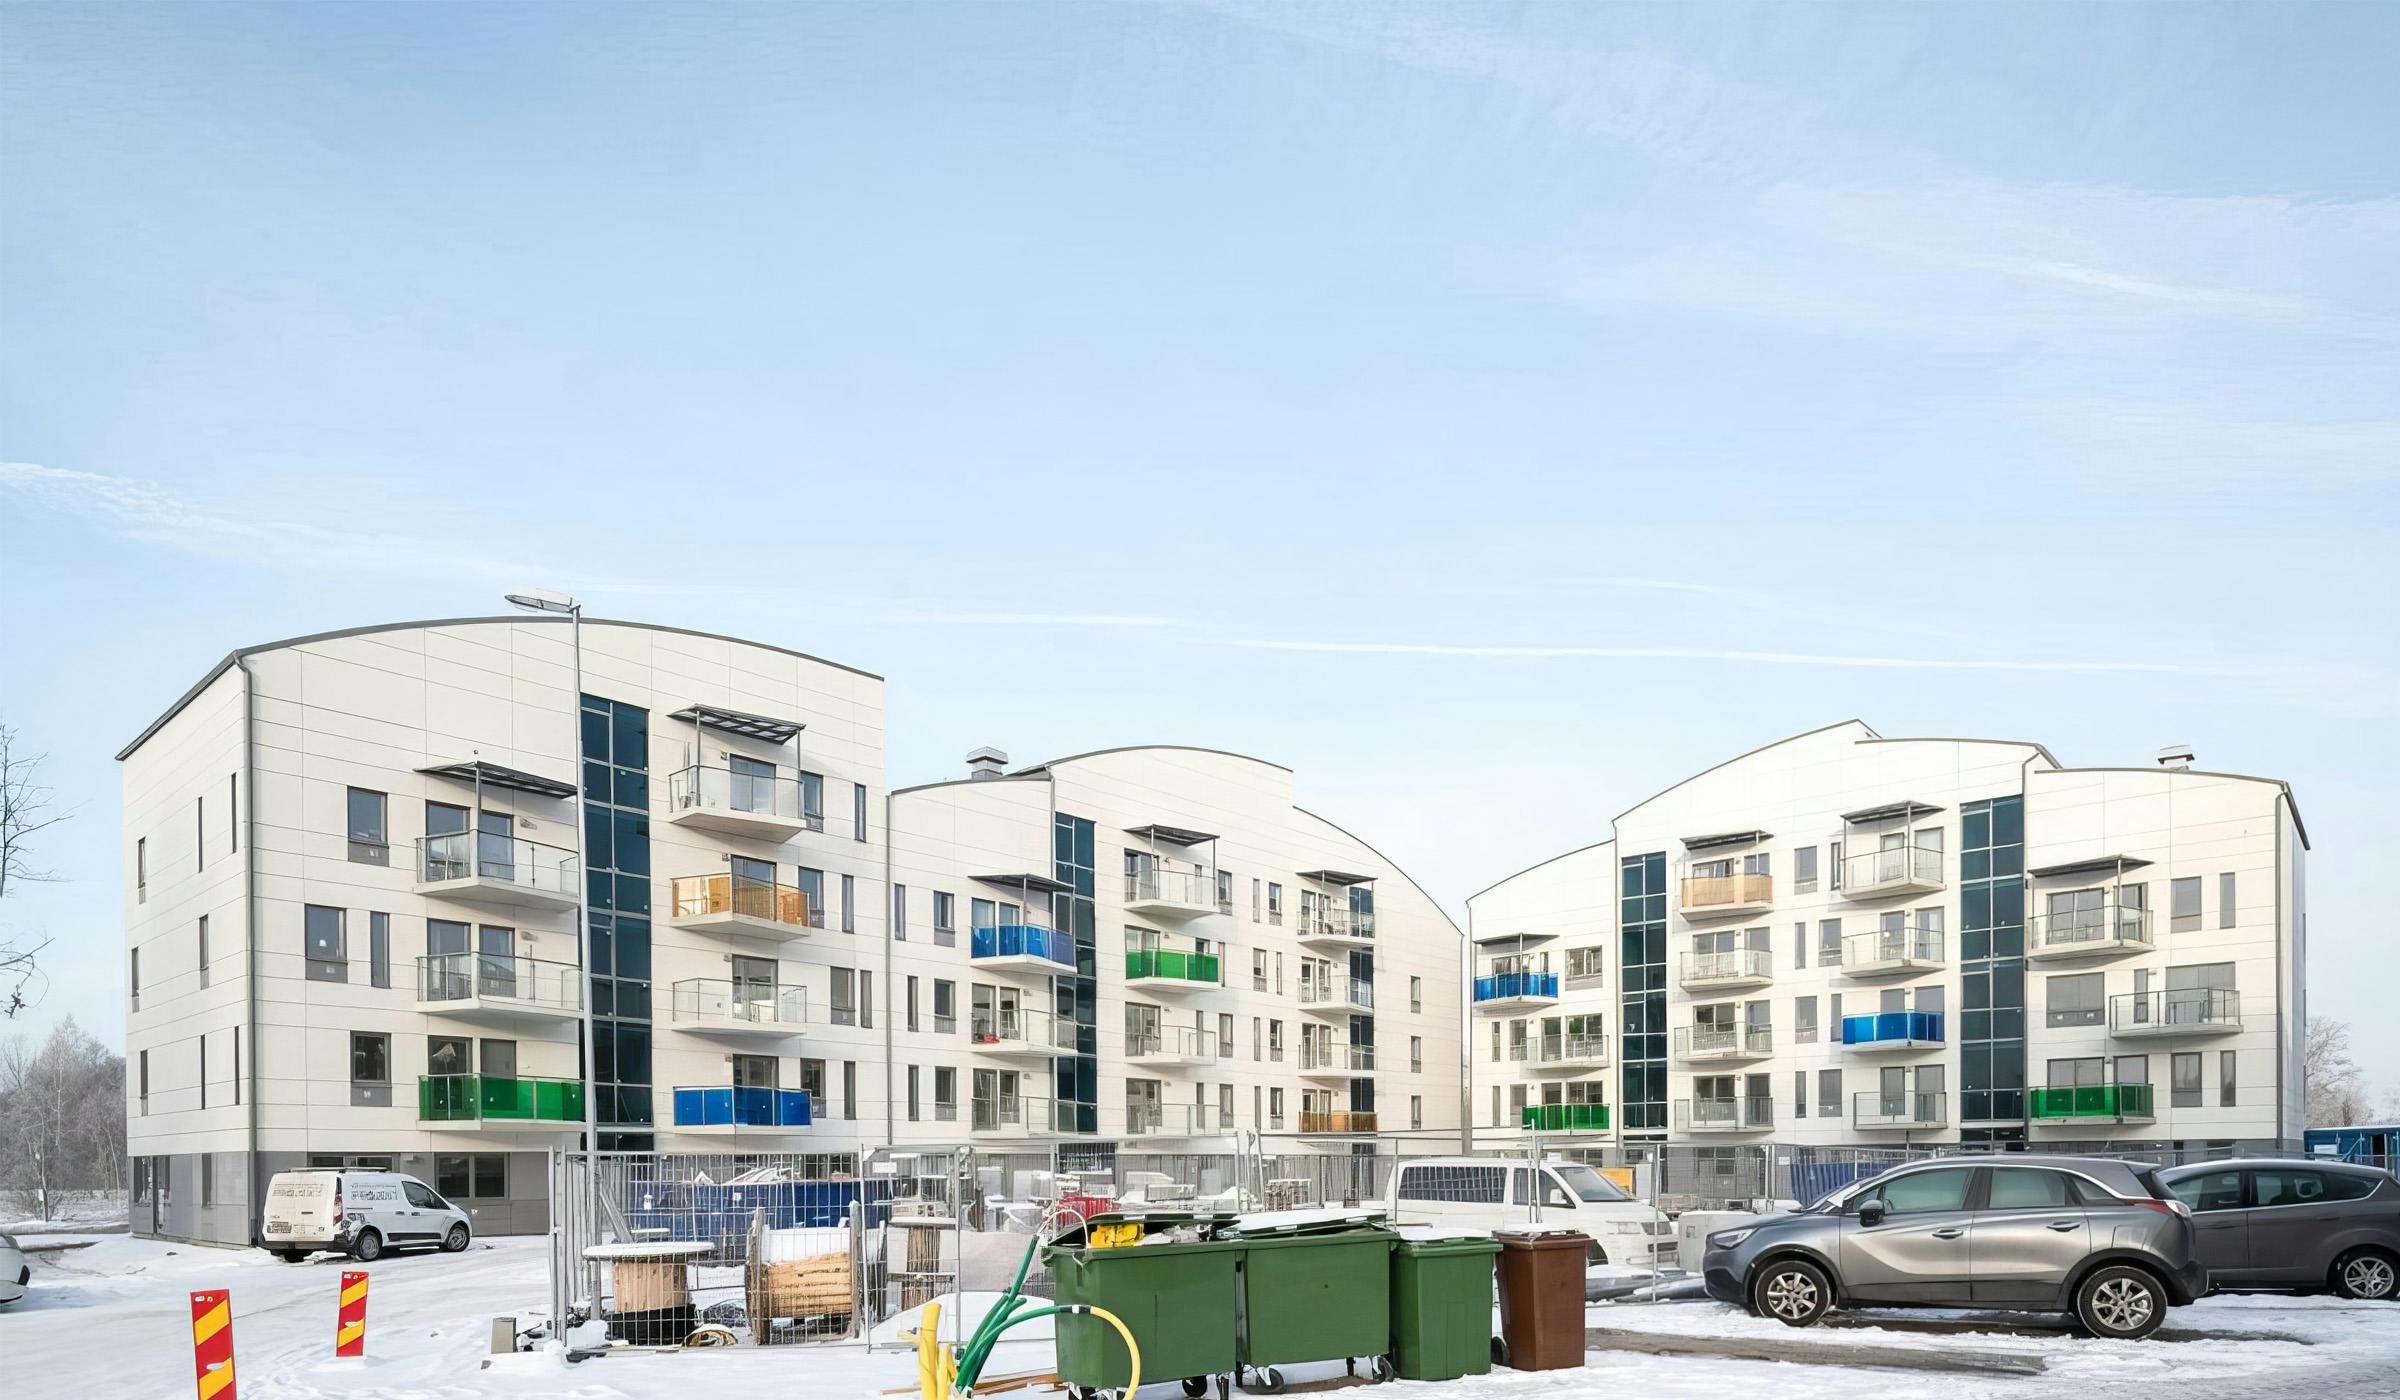 The Arnö Strand façade system promotes building longevity and augments energy efficiency